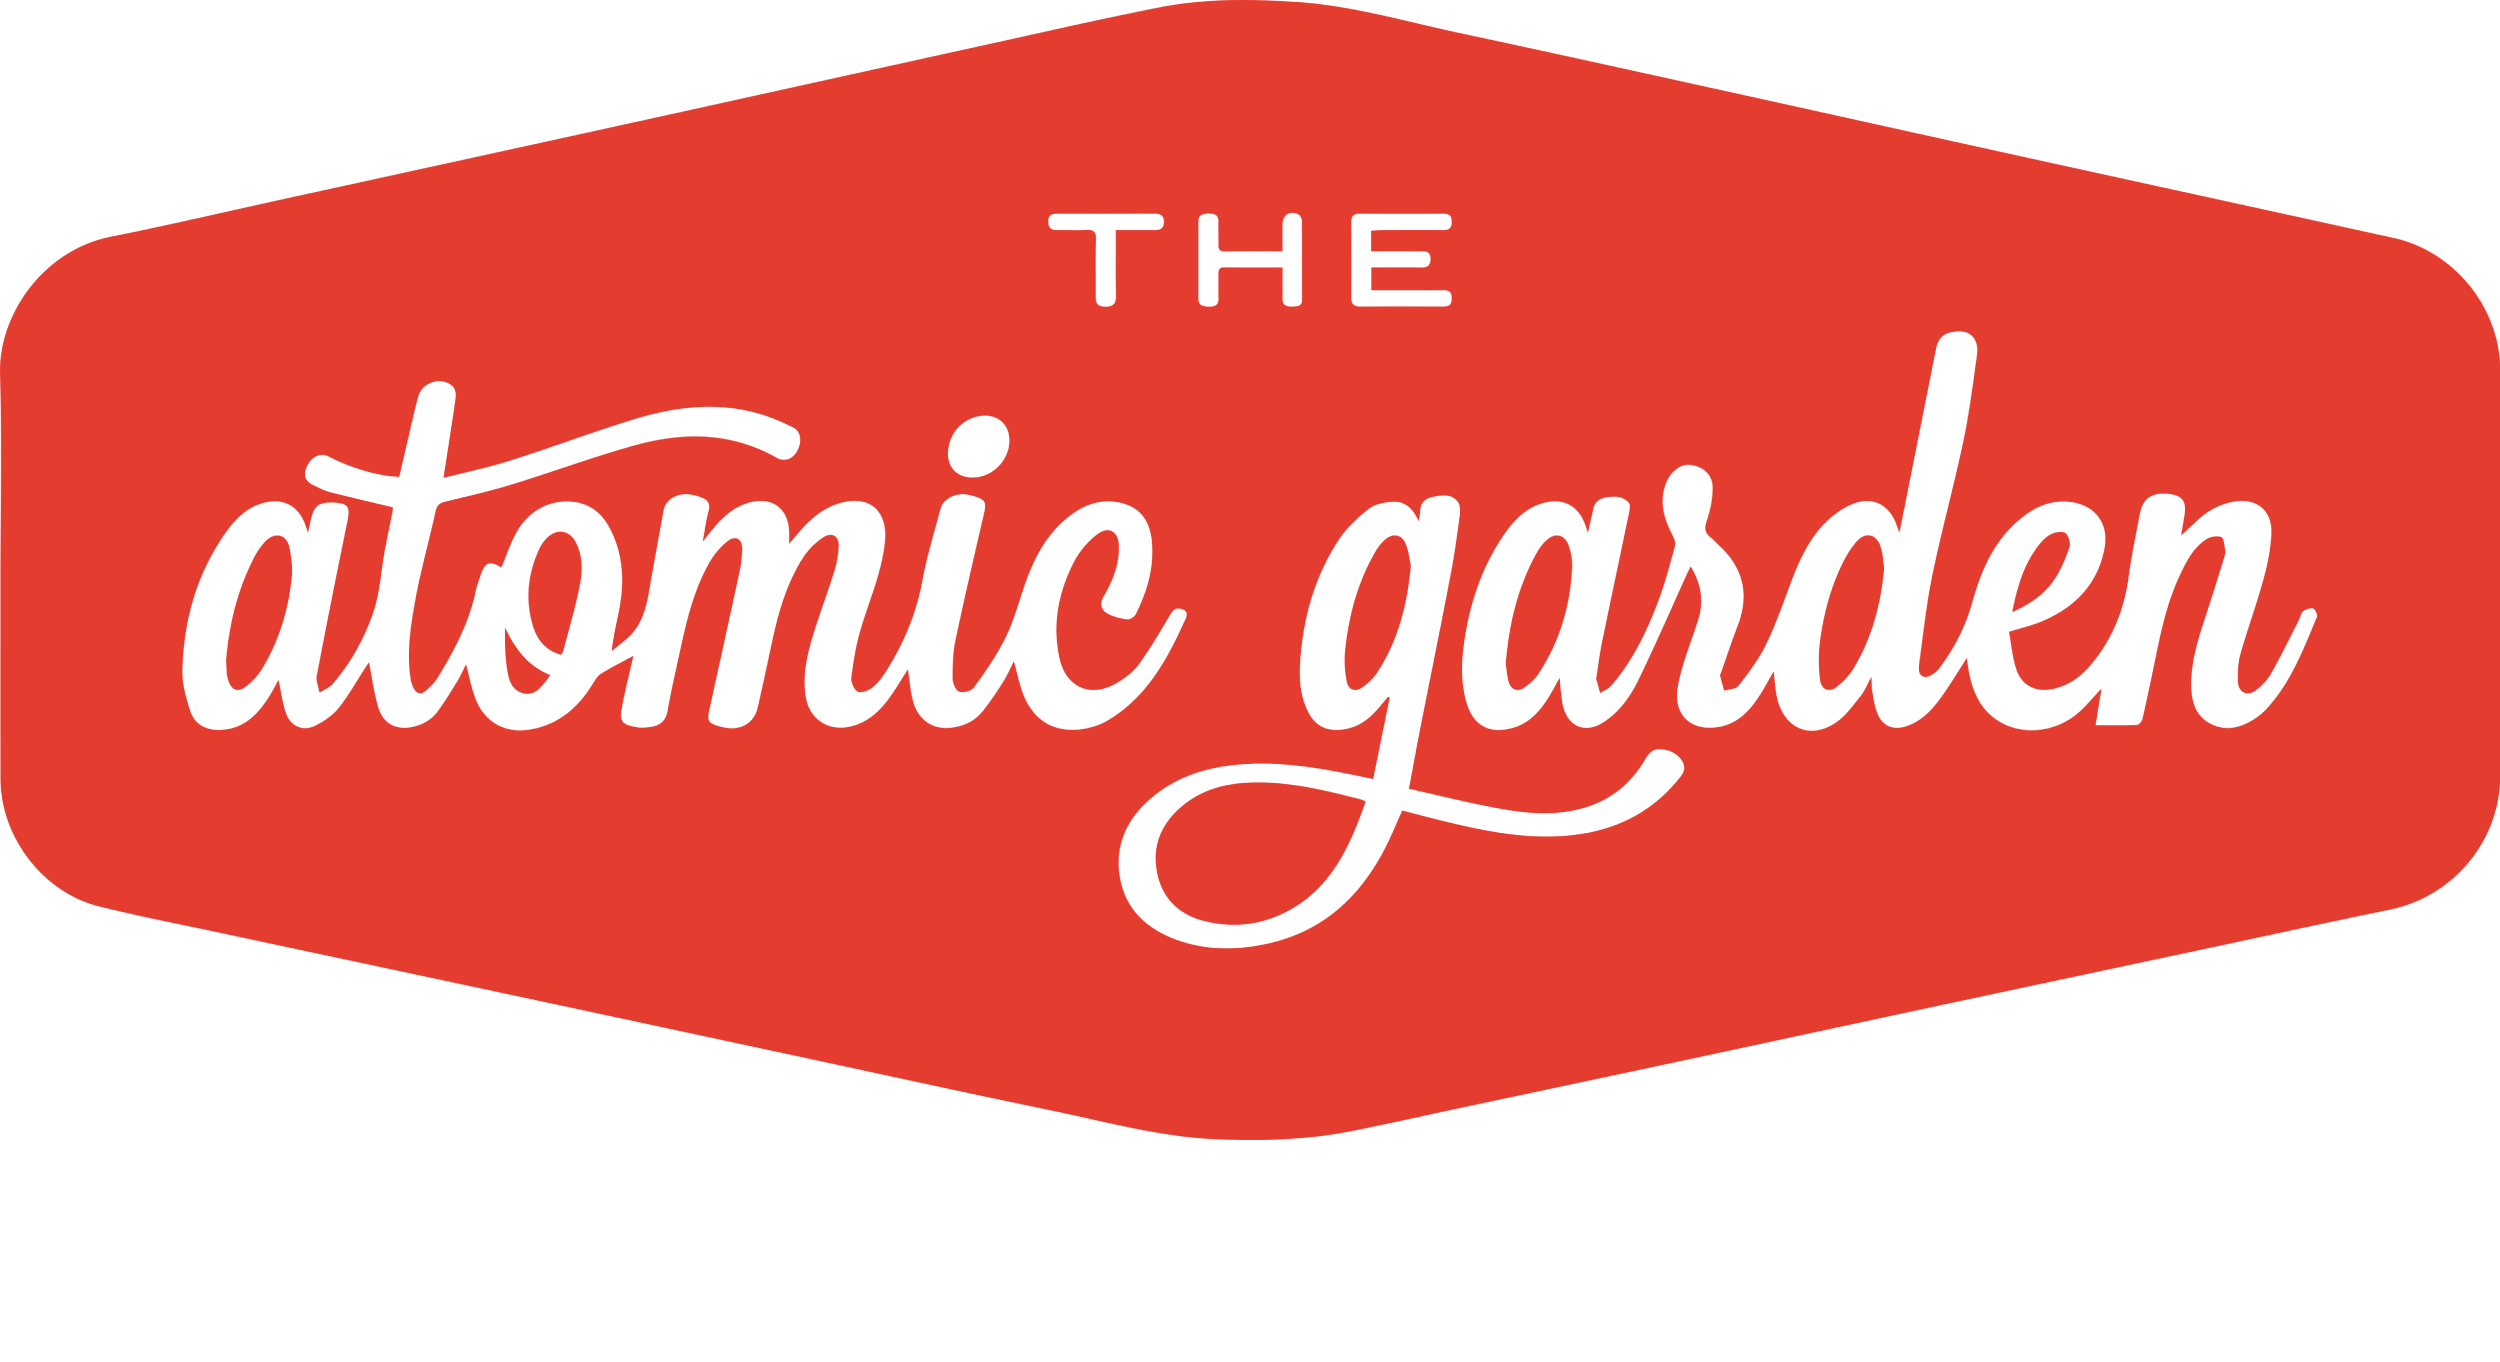 The Atomic Garden